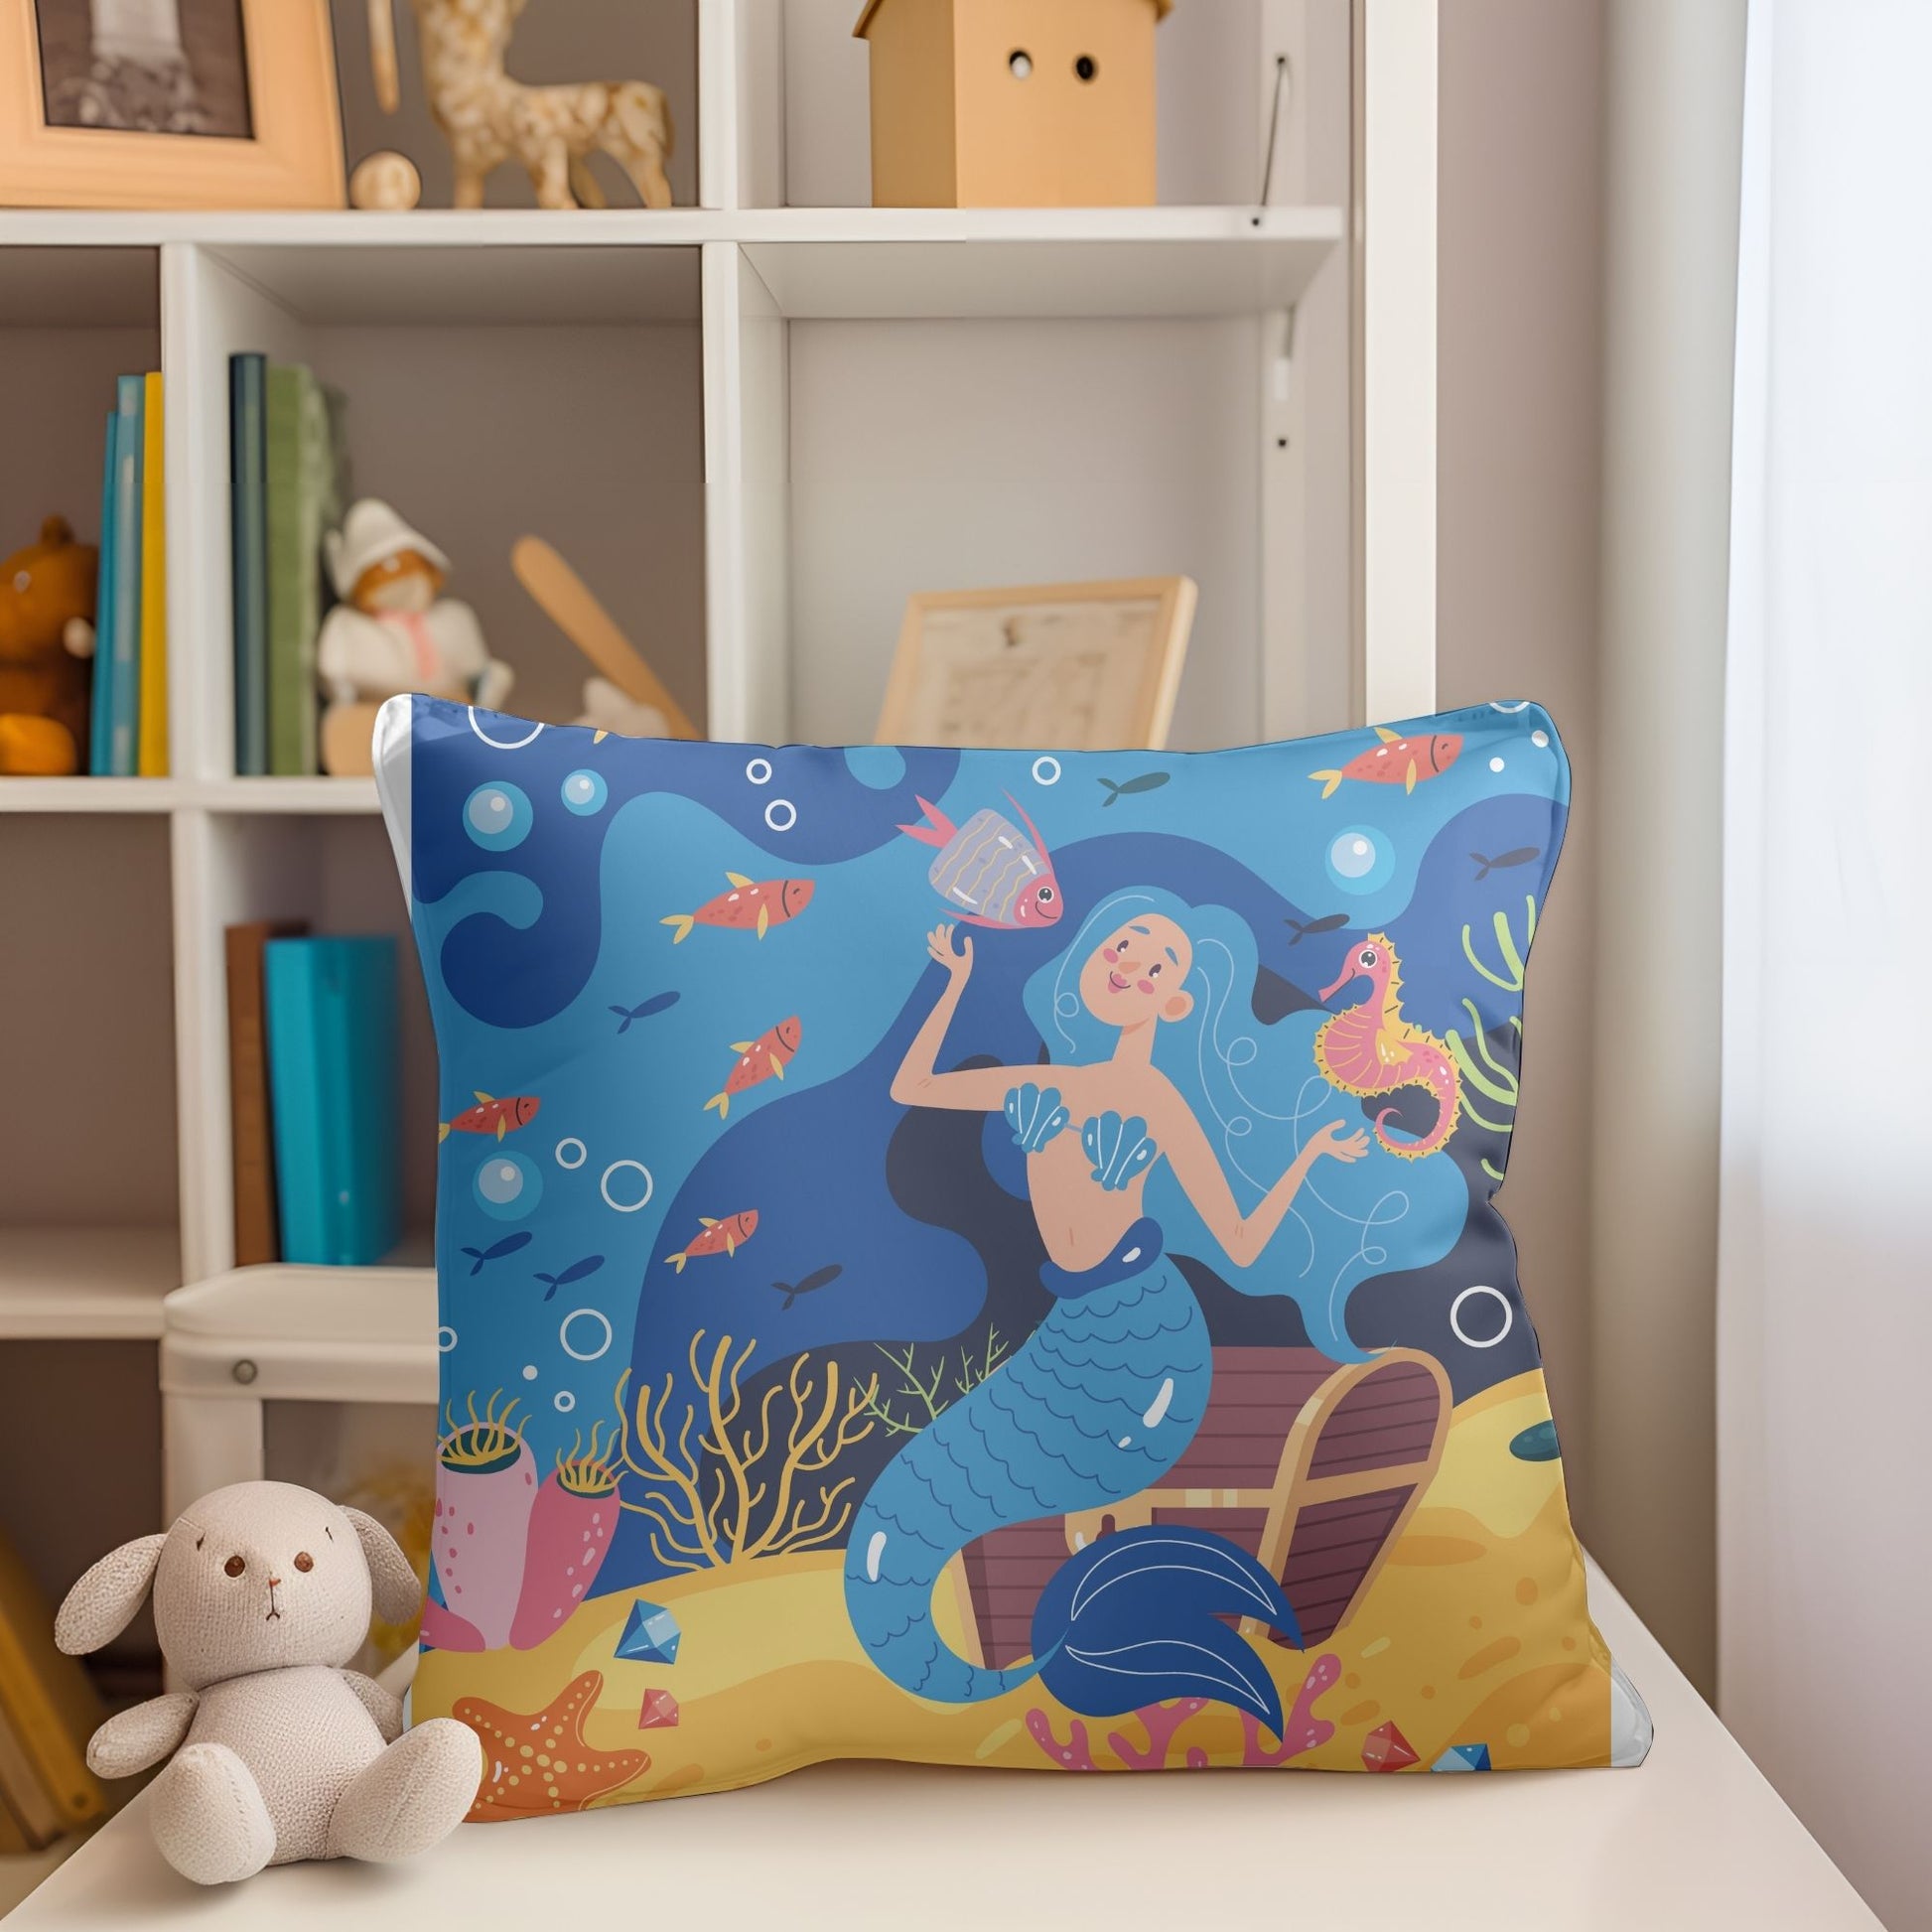 Dreamy mermaid-inspired pillow for girls' room decor.